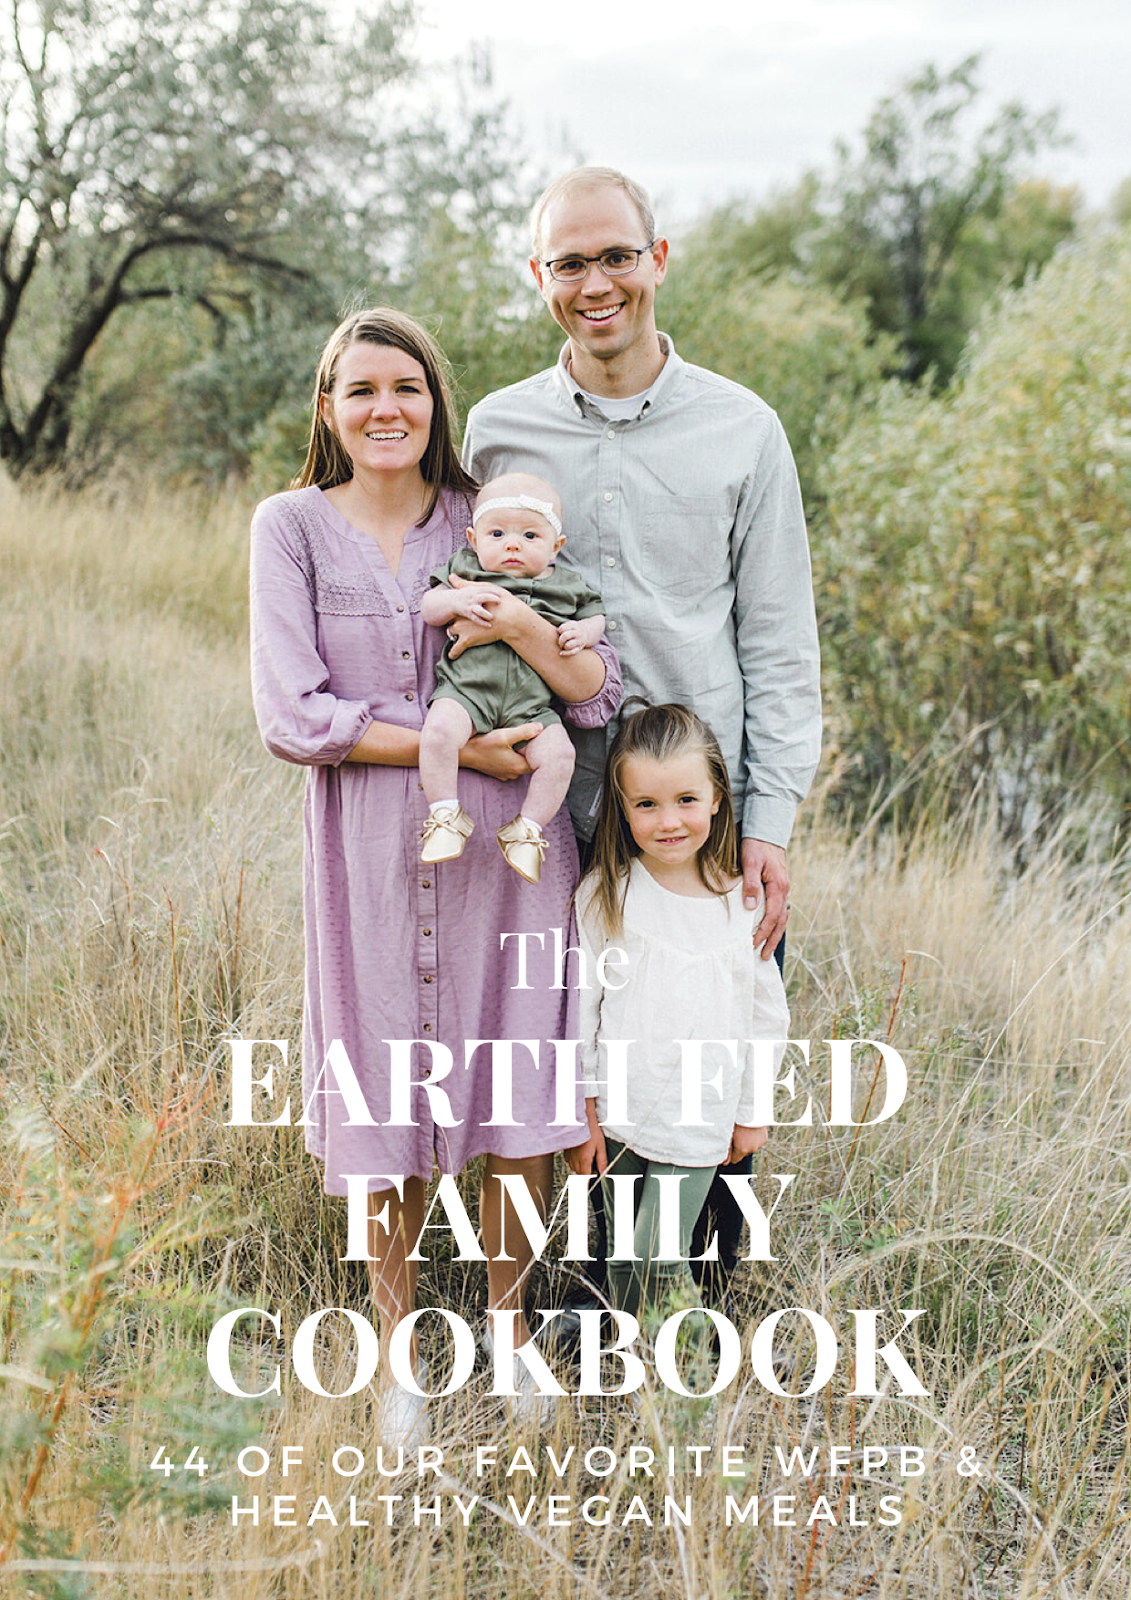 Earth Fed Family Cookbook